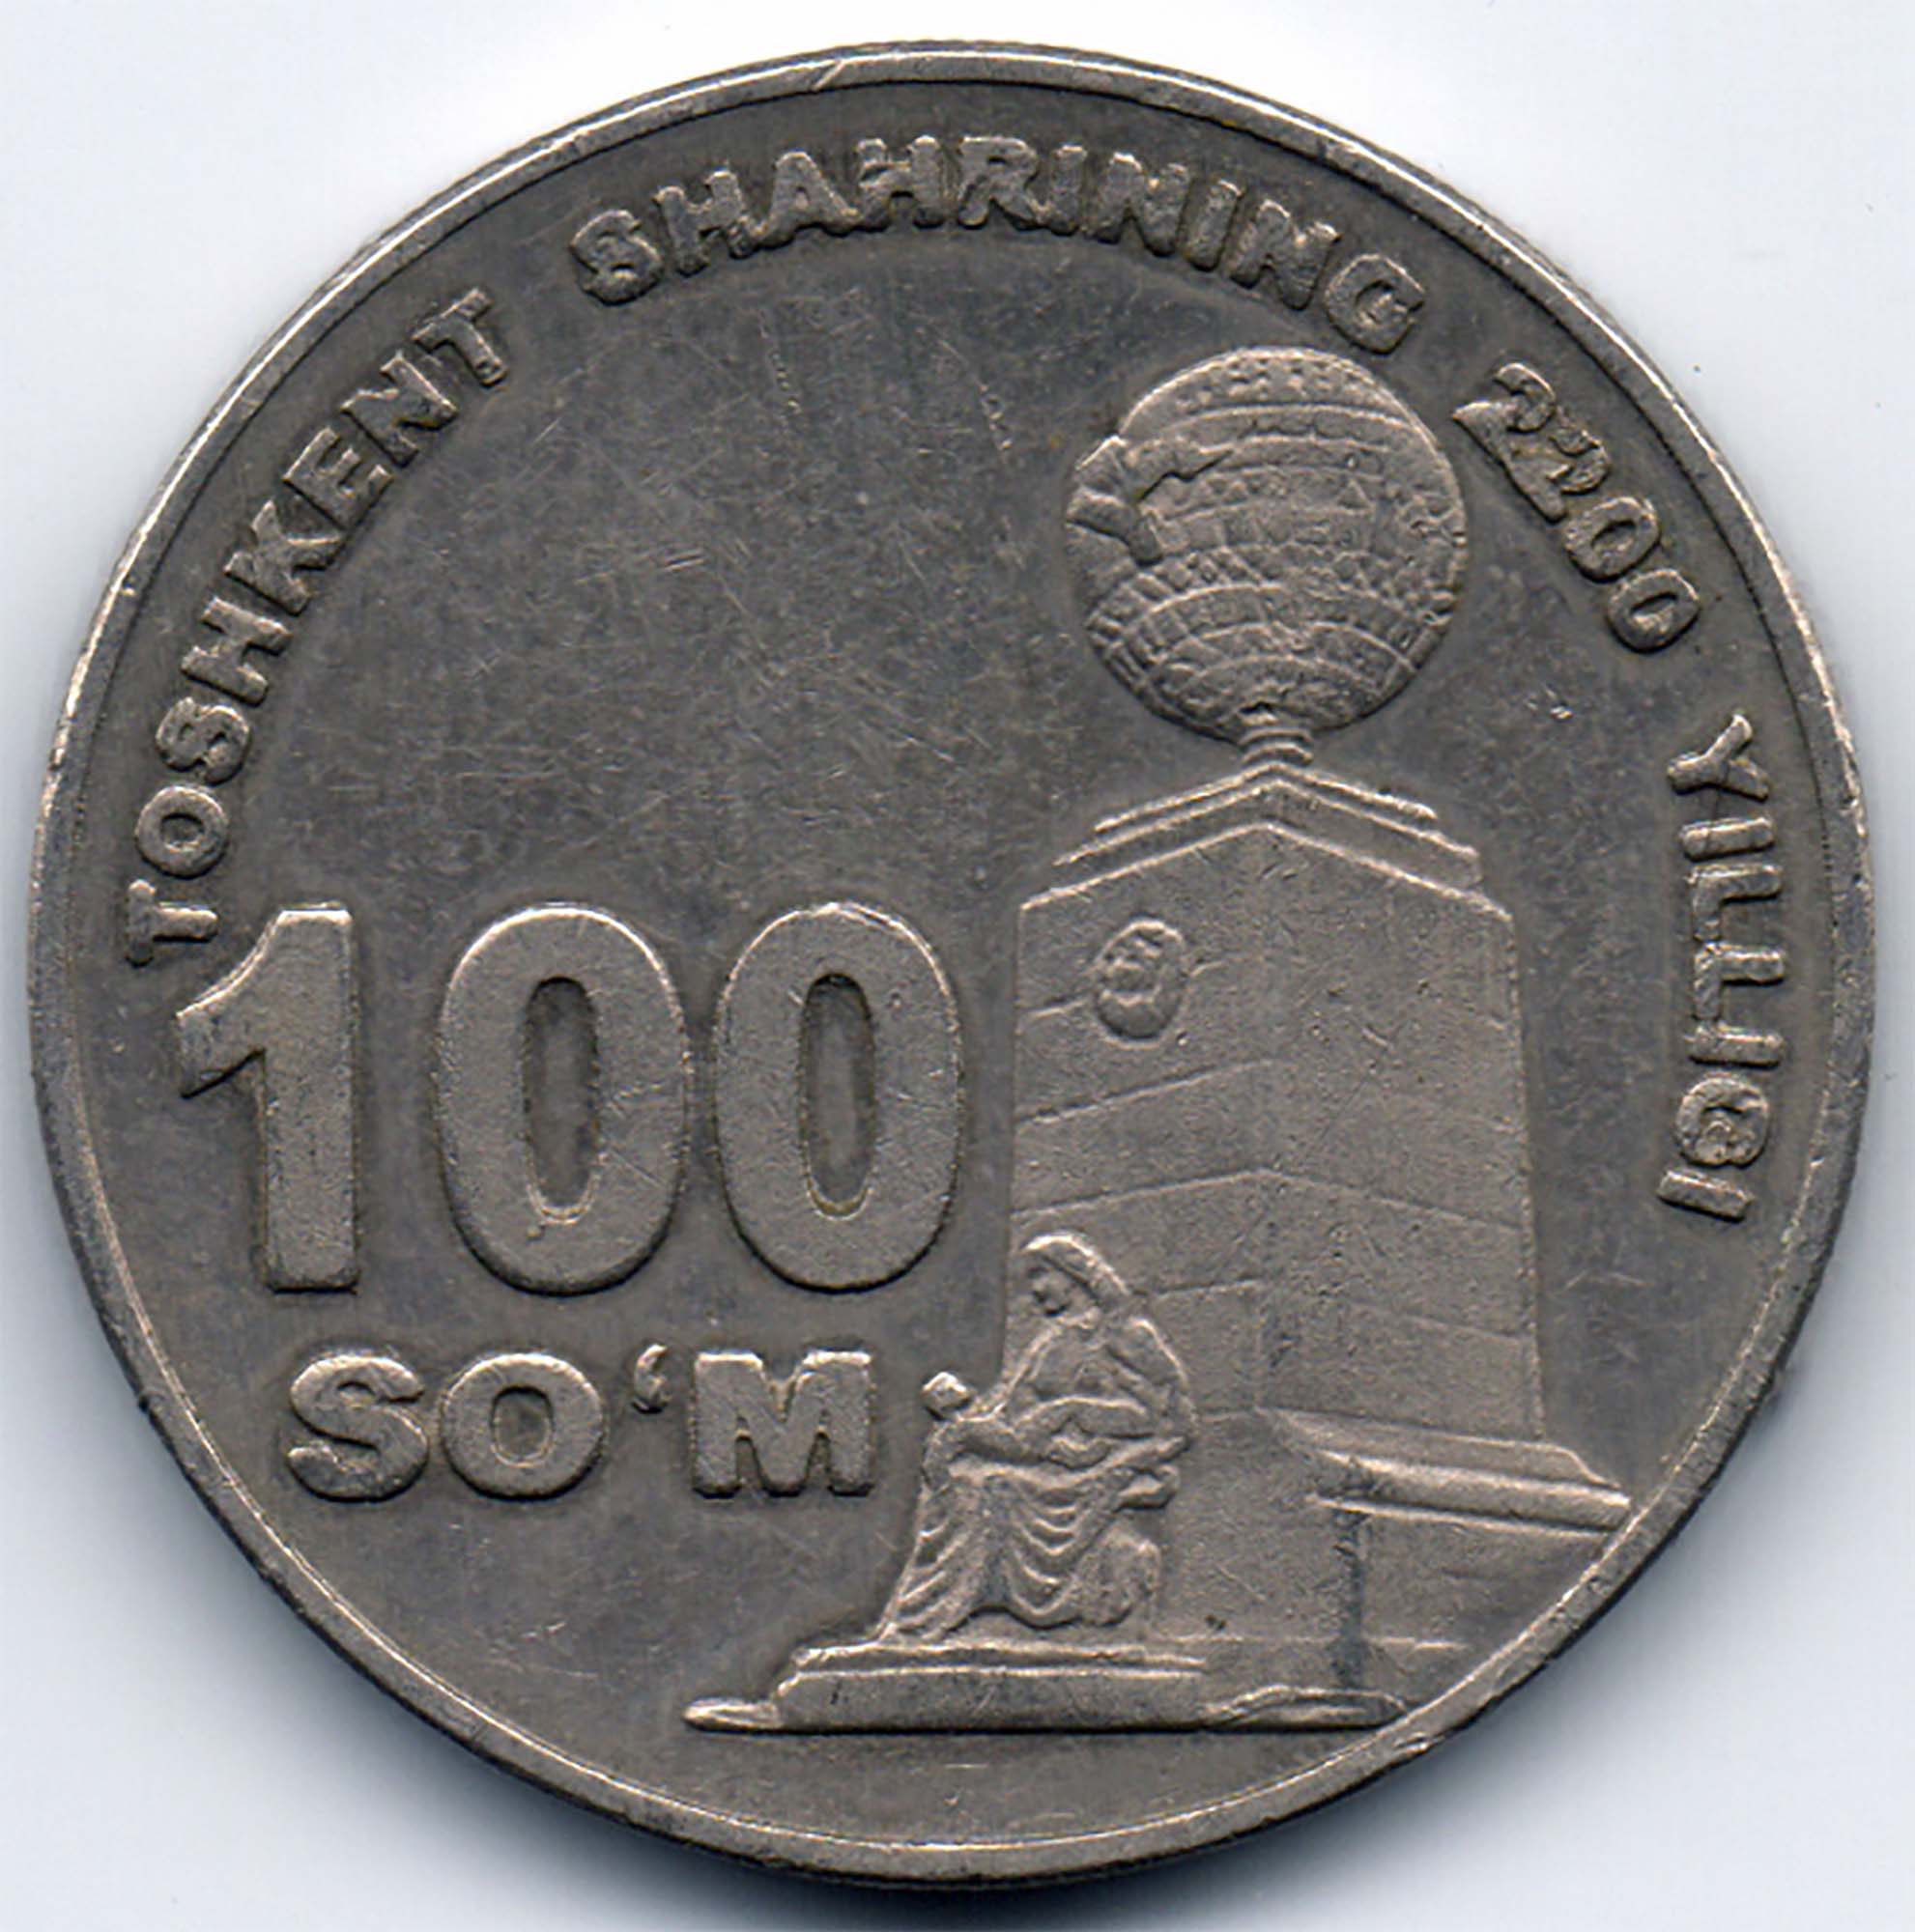 100 в узбекистане в сумах. Узбекистанская монета 100. 100 Сум монета. 100 So'm монета. Монеты 100 сум 2009 года.